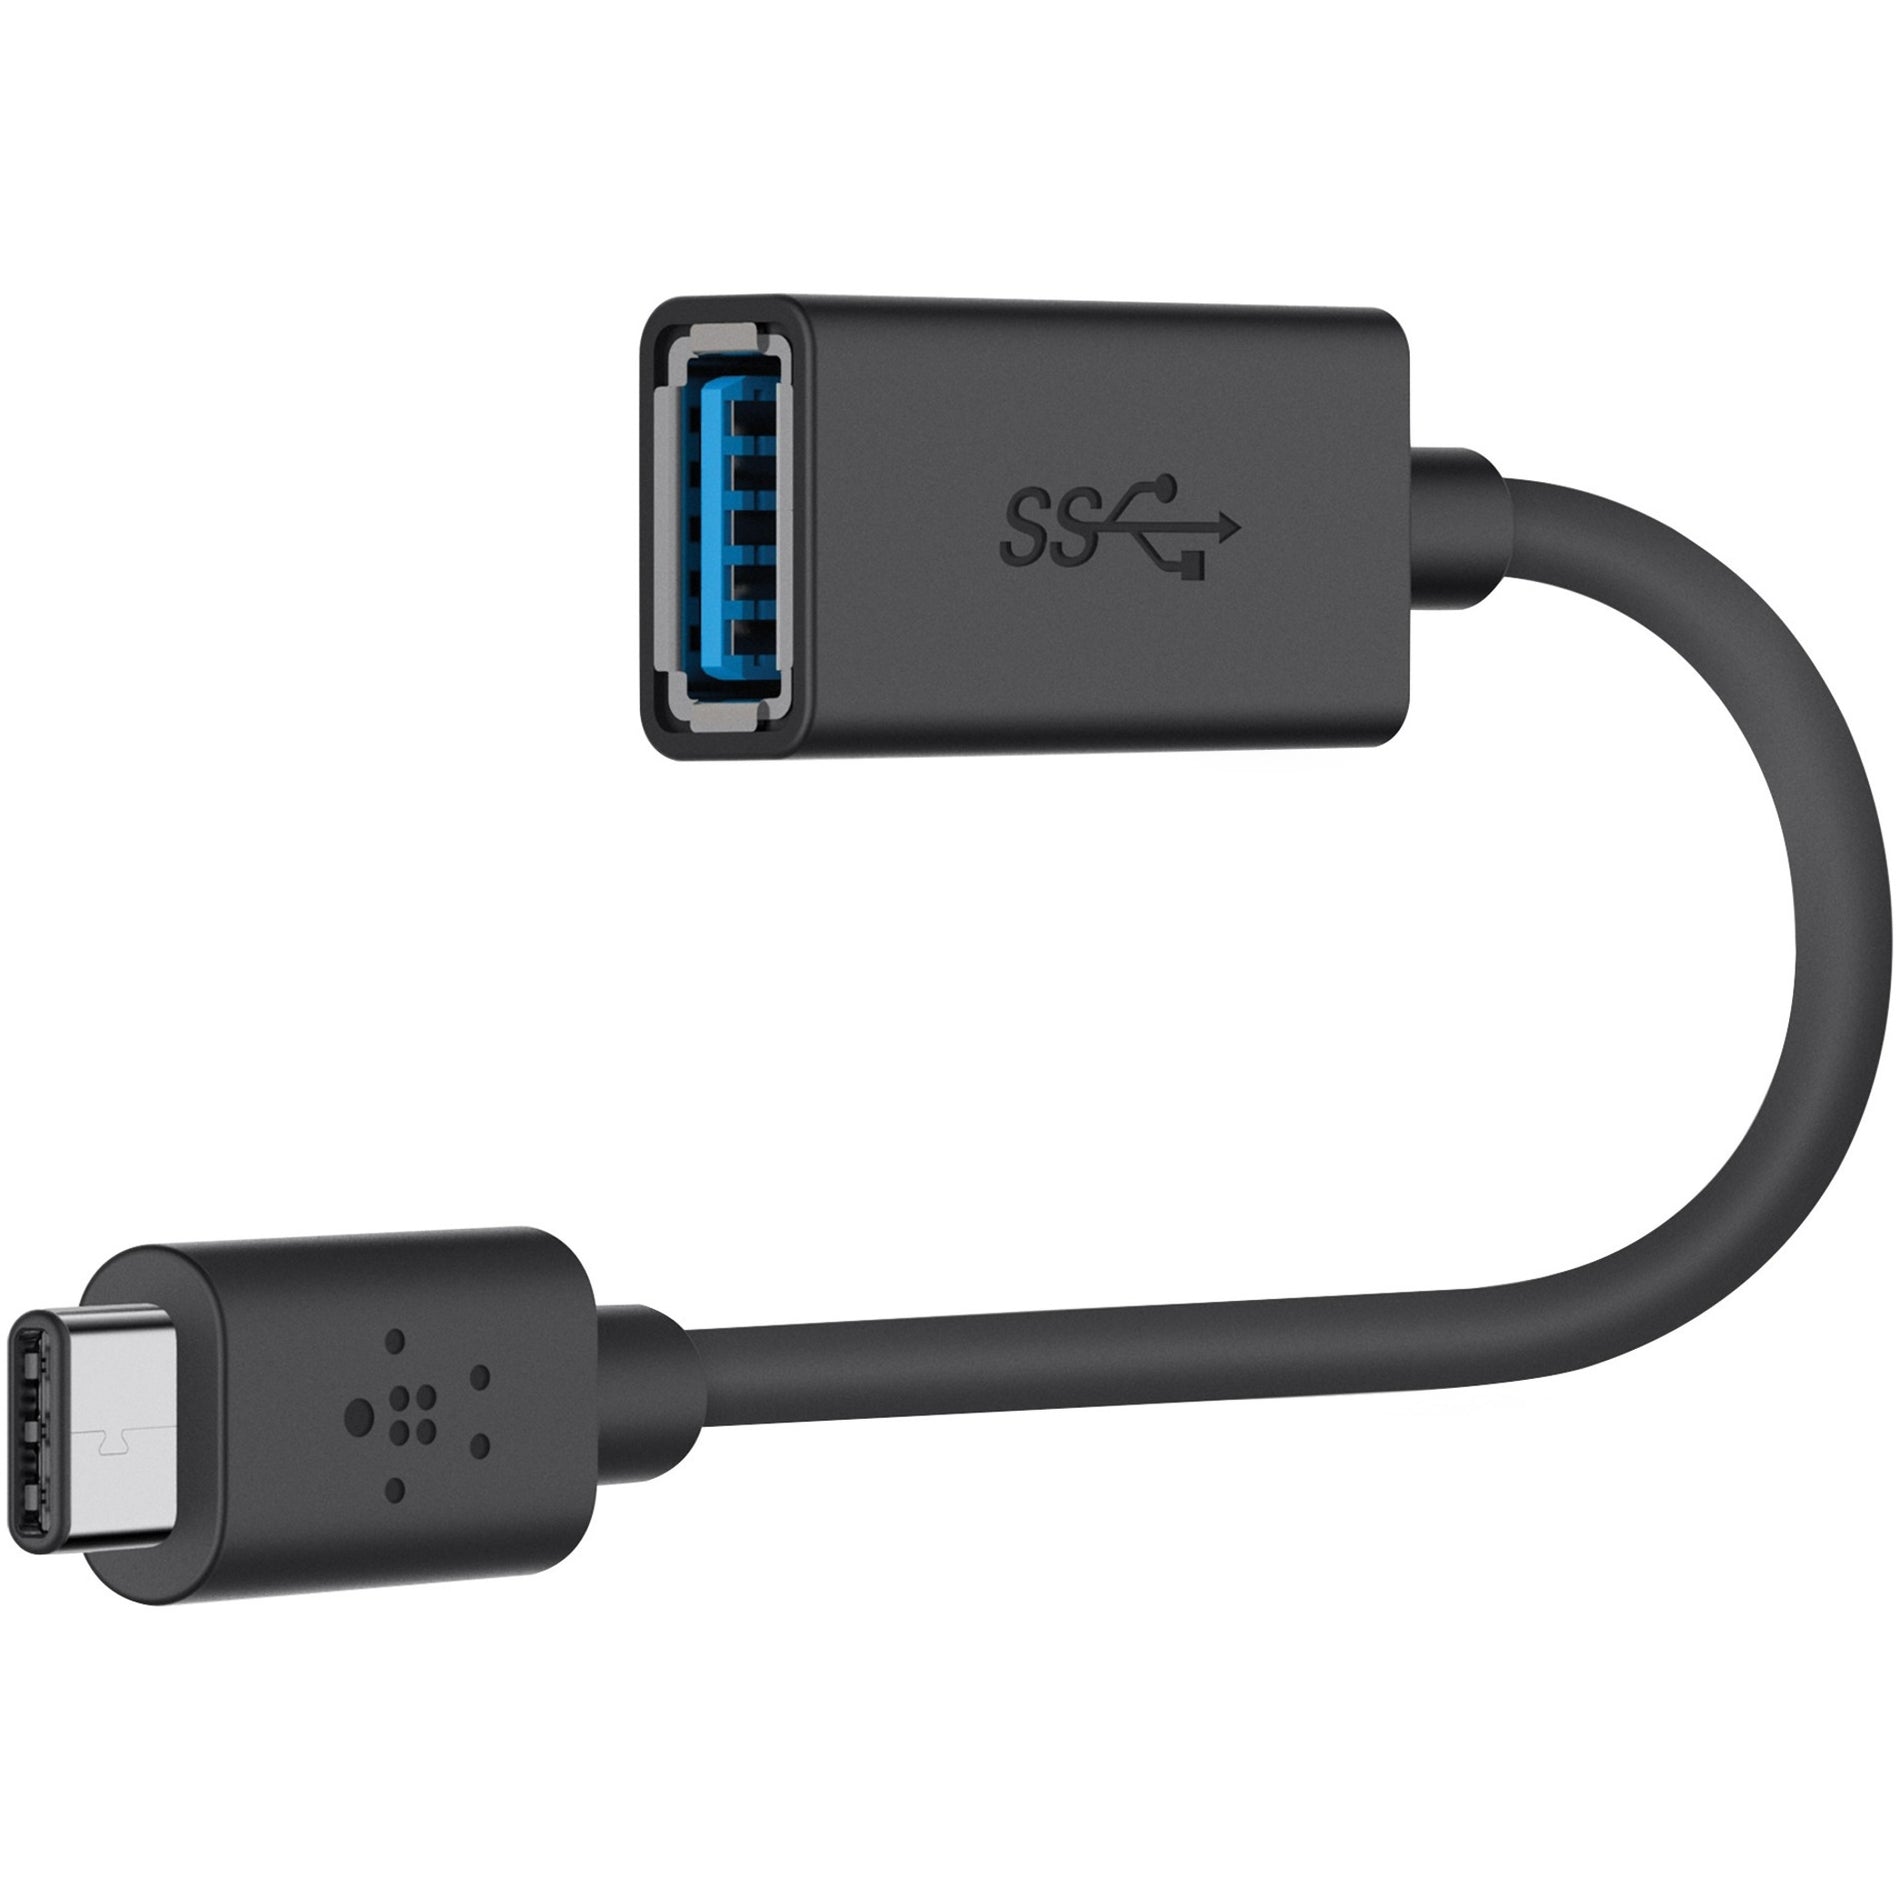 Belkin F2CU036BTBLK 3.0 USB-C to USB-A Adapter Reversible Charging 5" Cable Length  Belkin F2CU036BTBLK 3.0 Adaptateur USB-C vers USB-A Charge Réversible Longueur du Câble de 5"